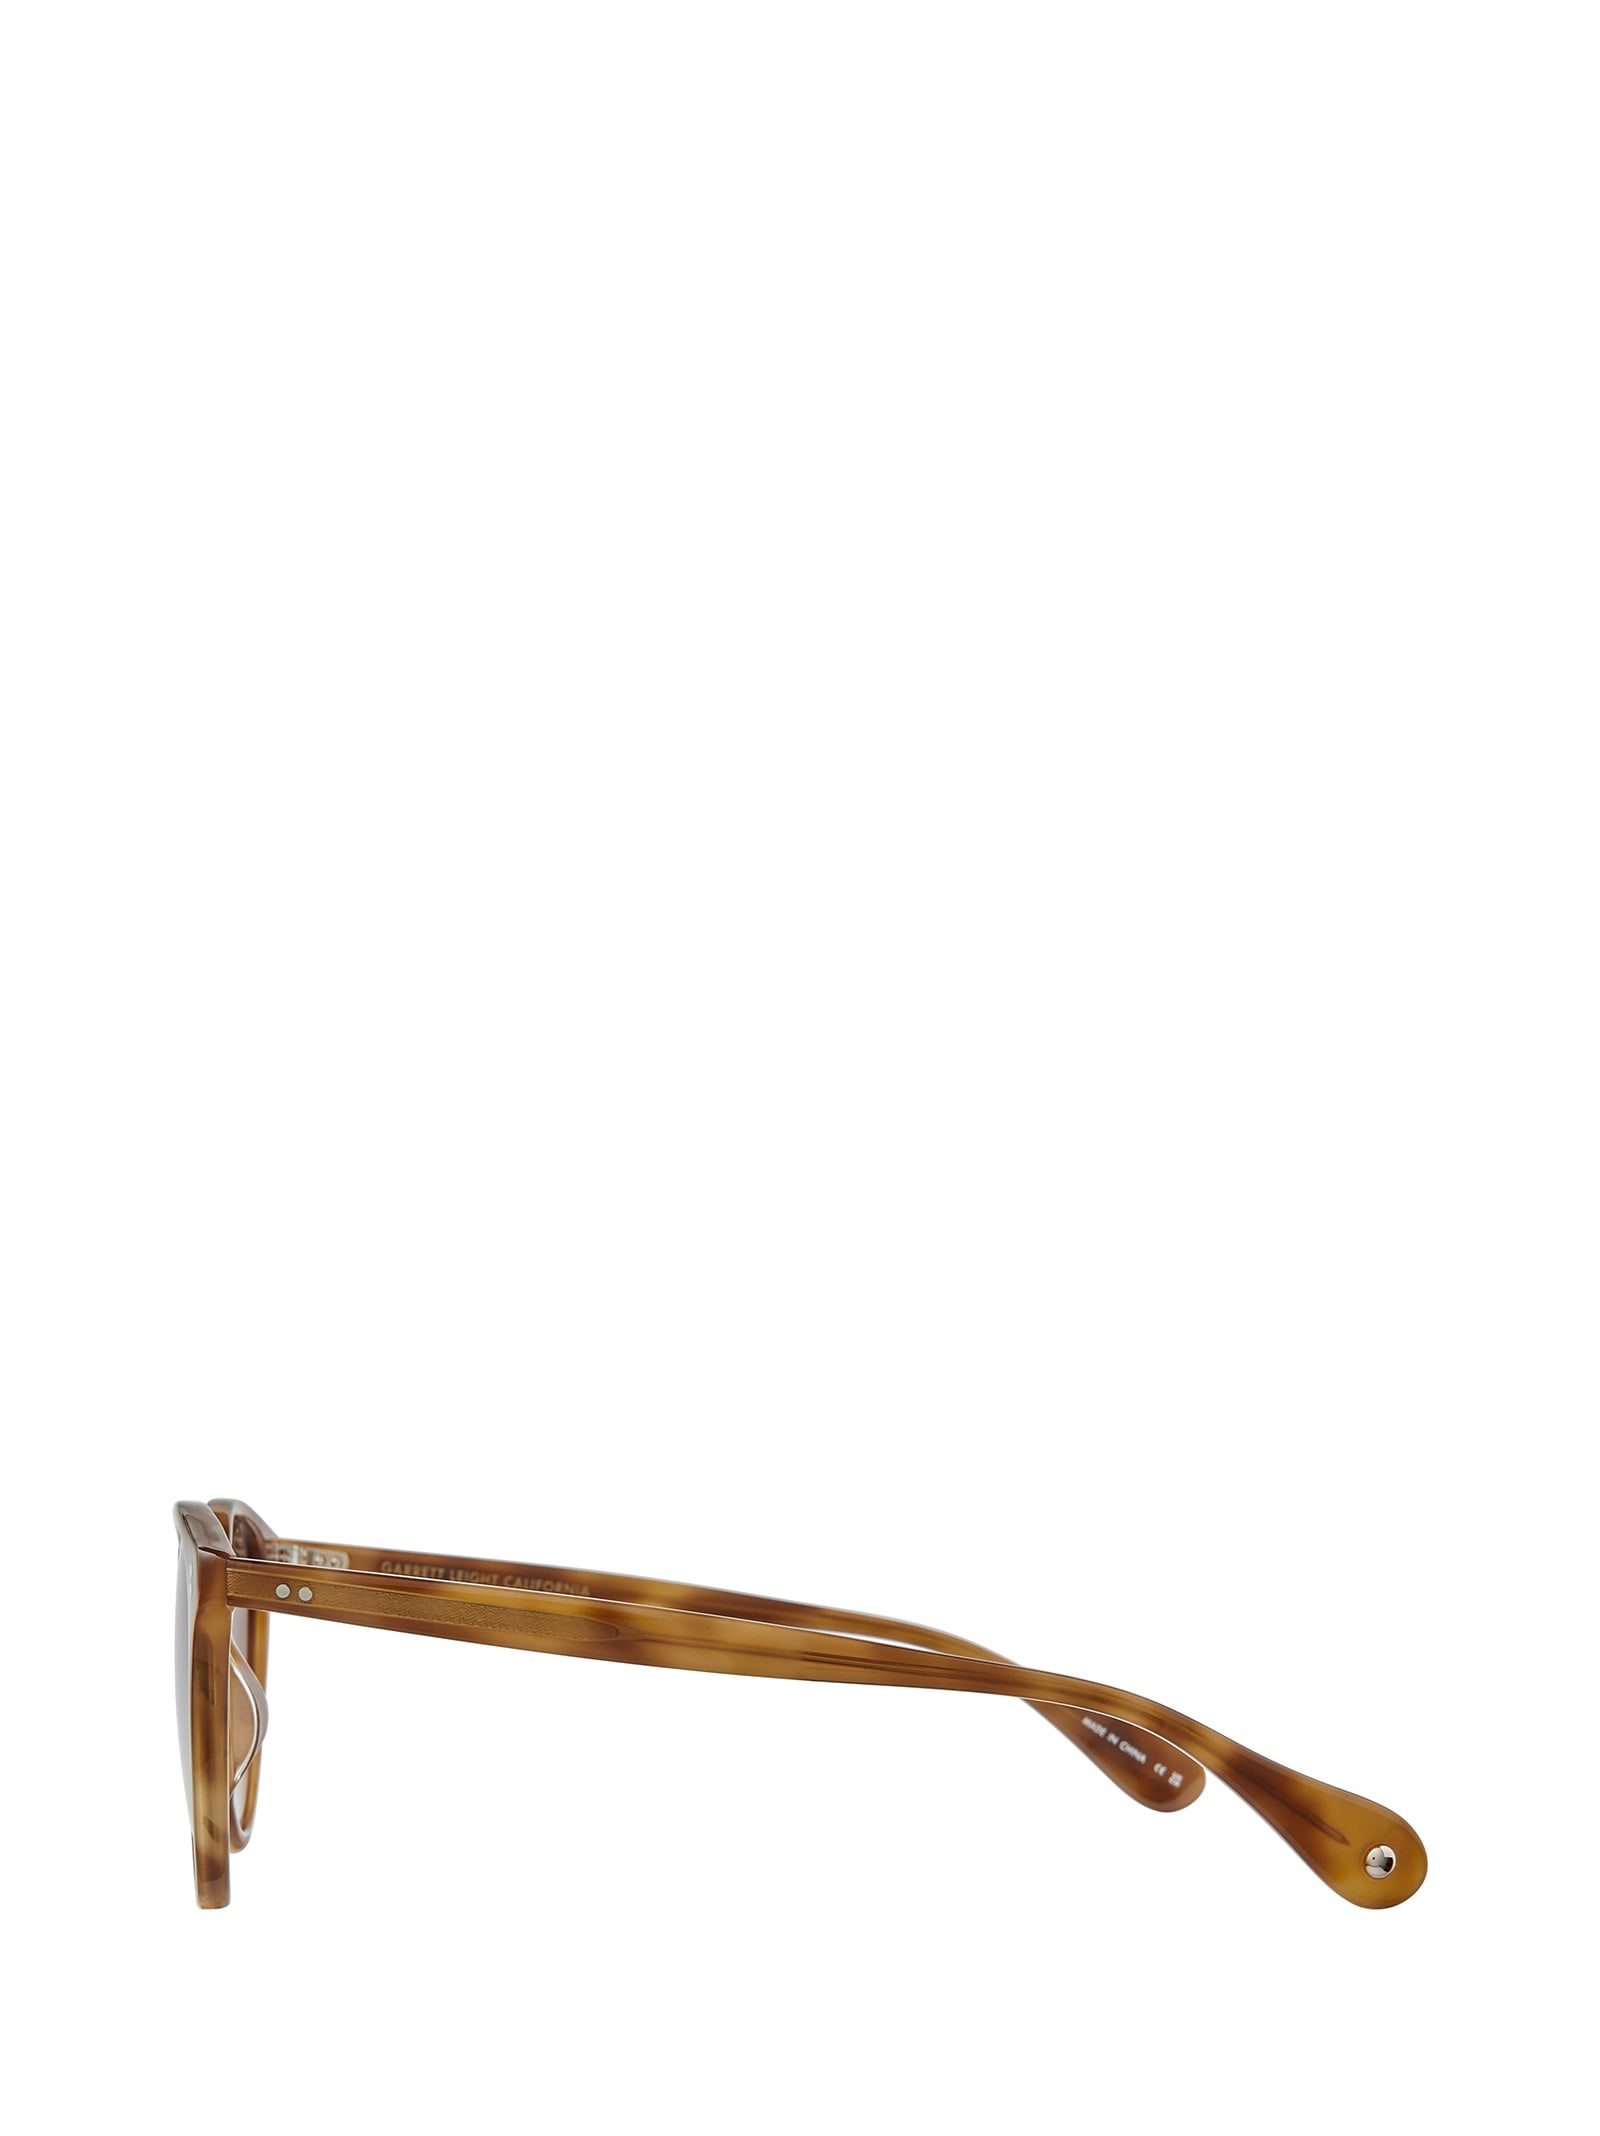 Shop Garrett Leight Manzanita Sun Ember Tortoise/california Dream Gradient Sunglasses